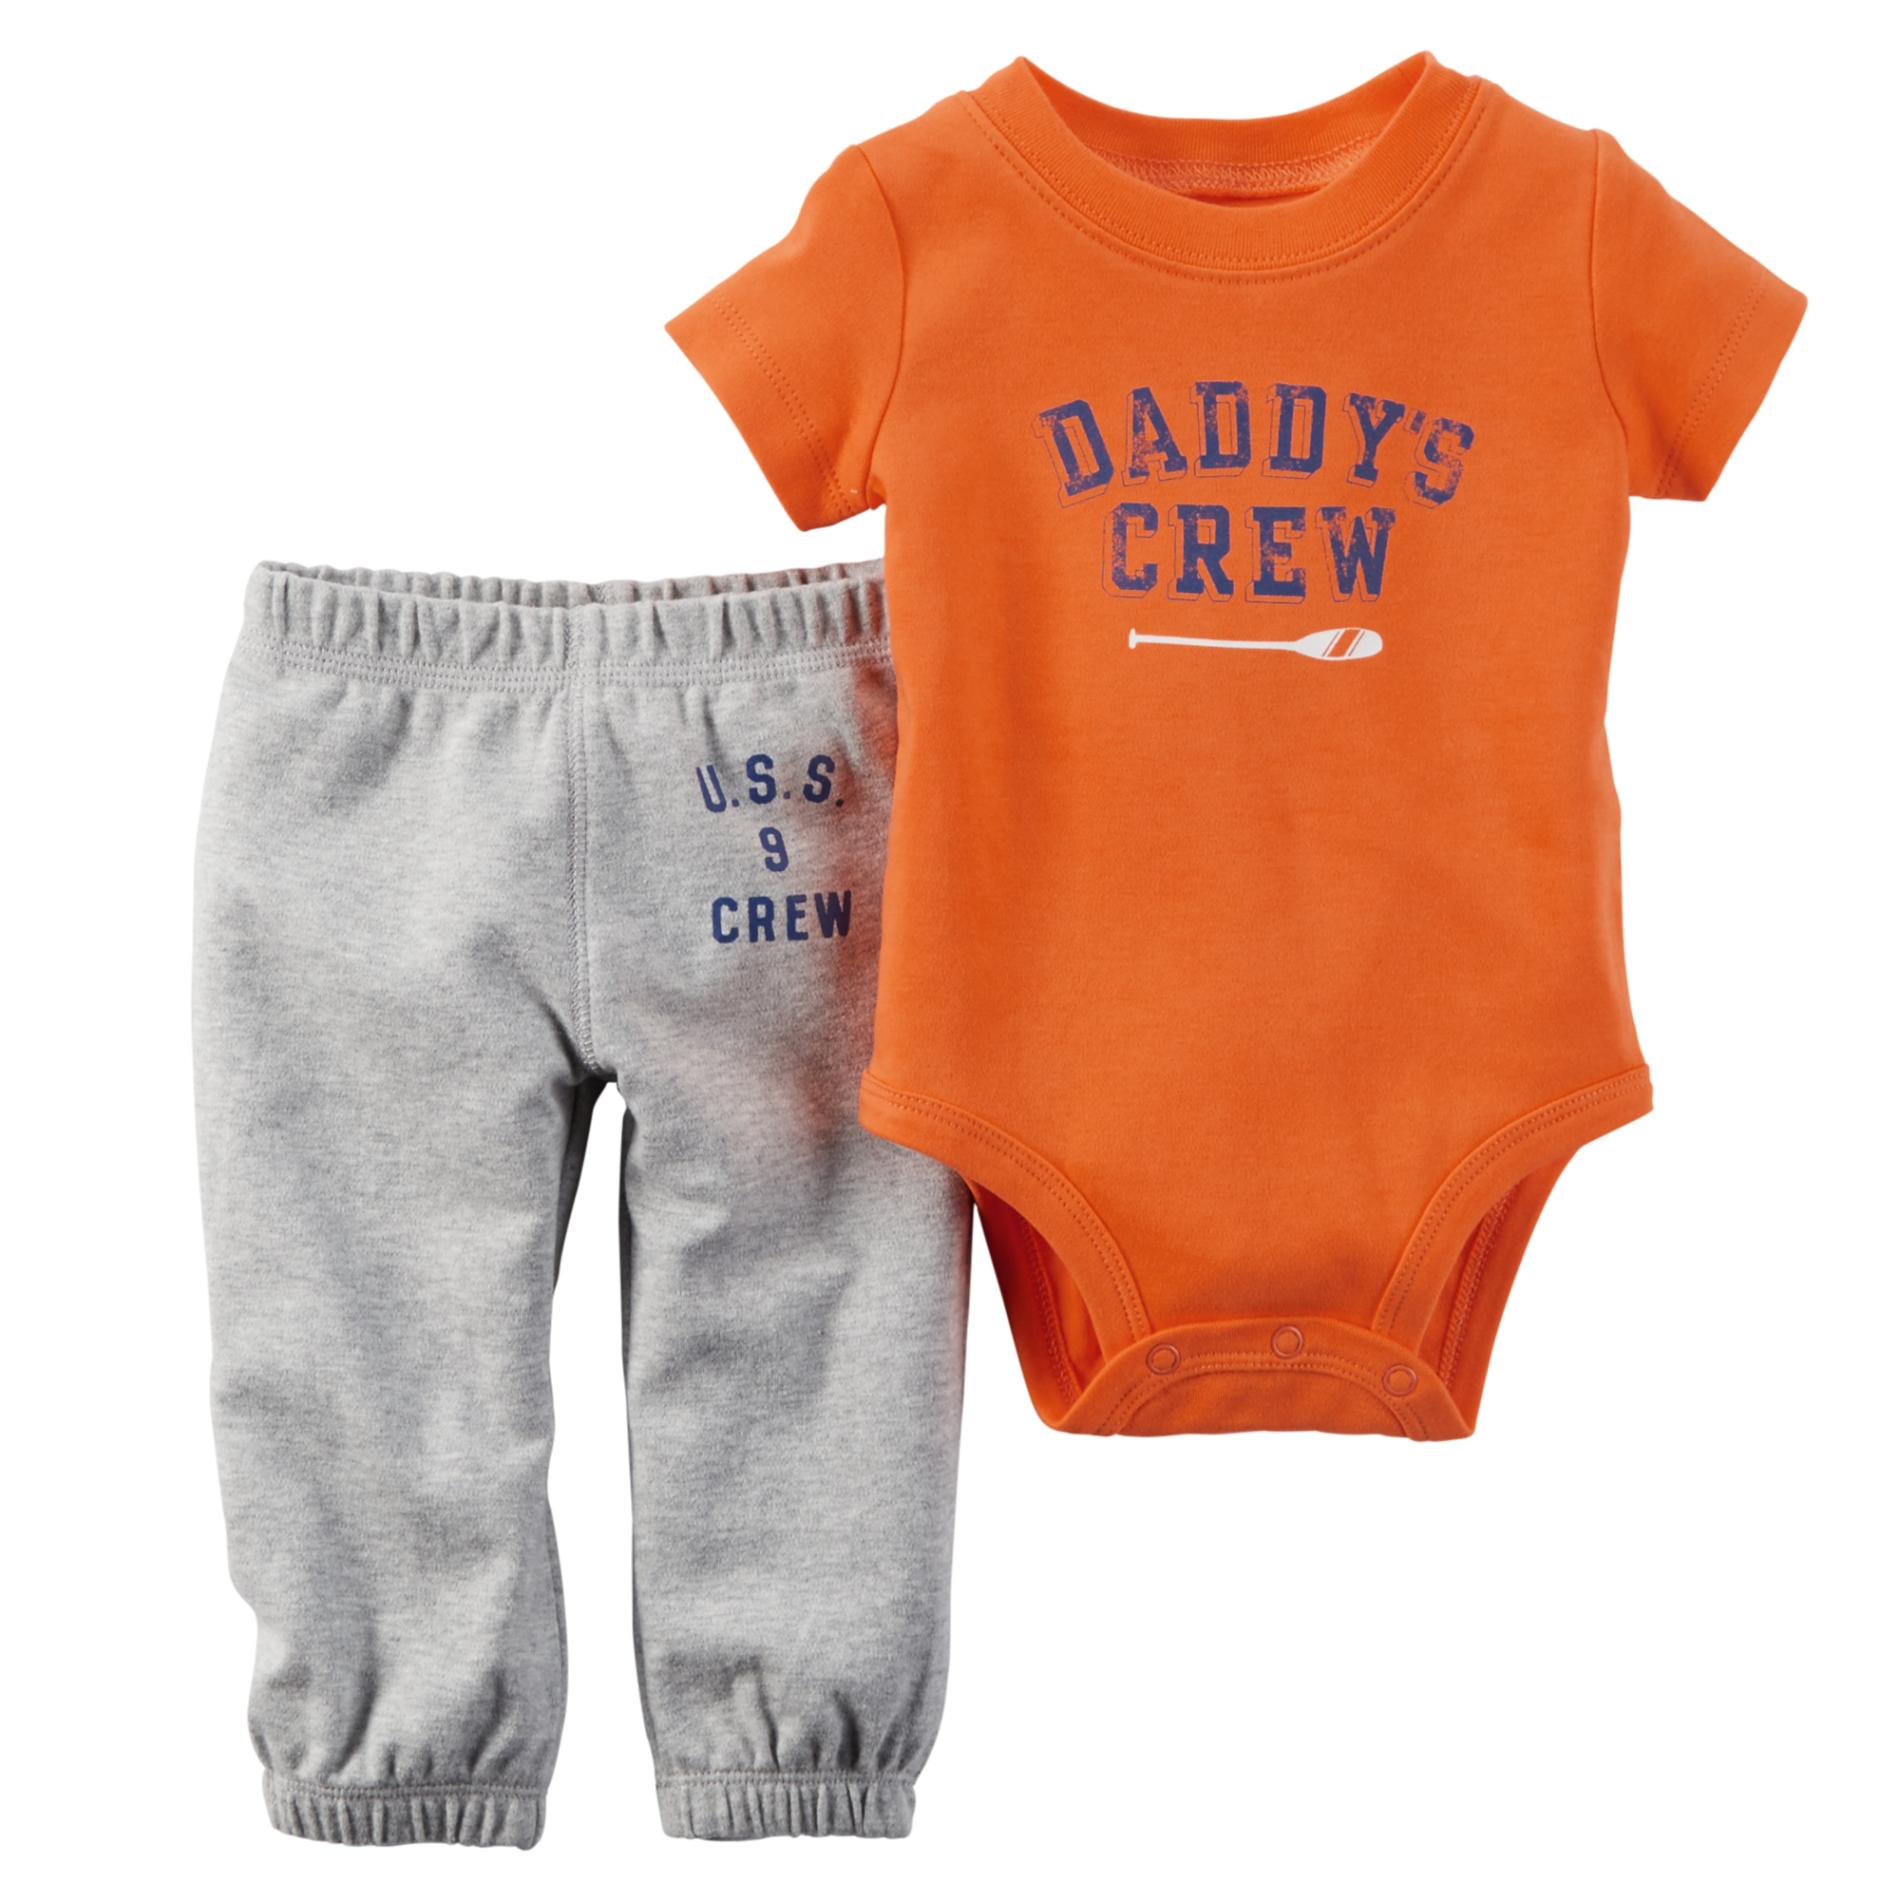 Carter's Newborn & Infant Boy's Bodysuit & Sweatpants - Daddy's Crew